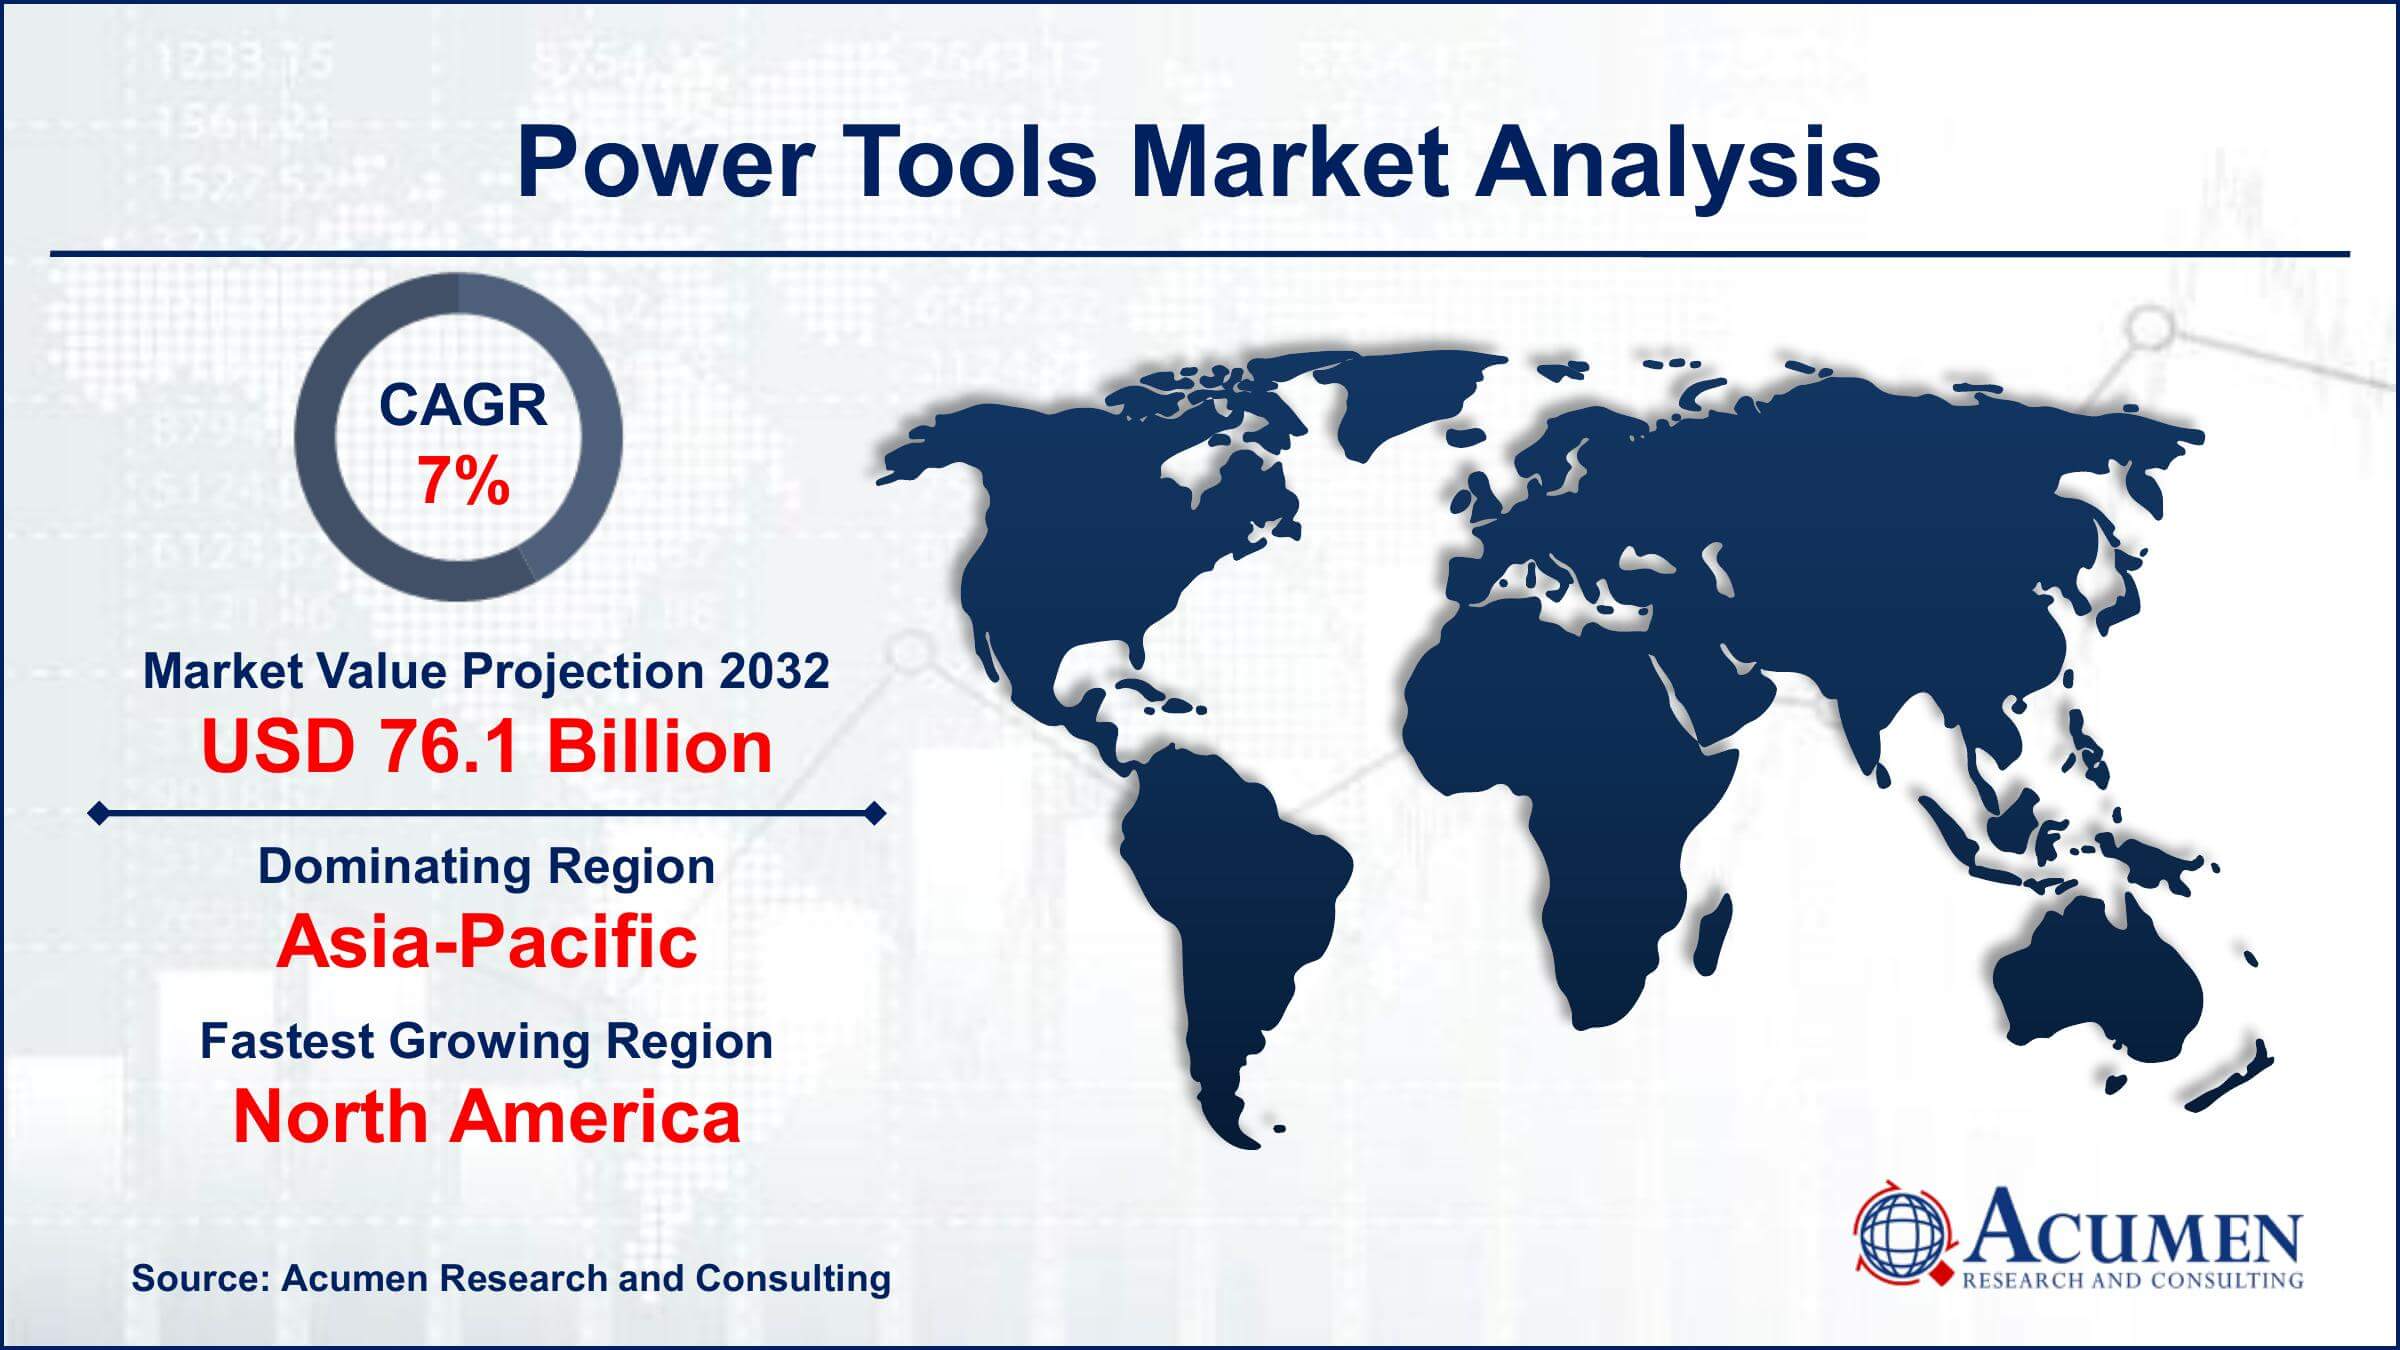 Global Power Tools Market Trends